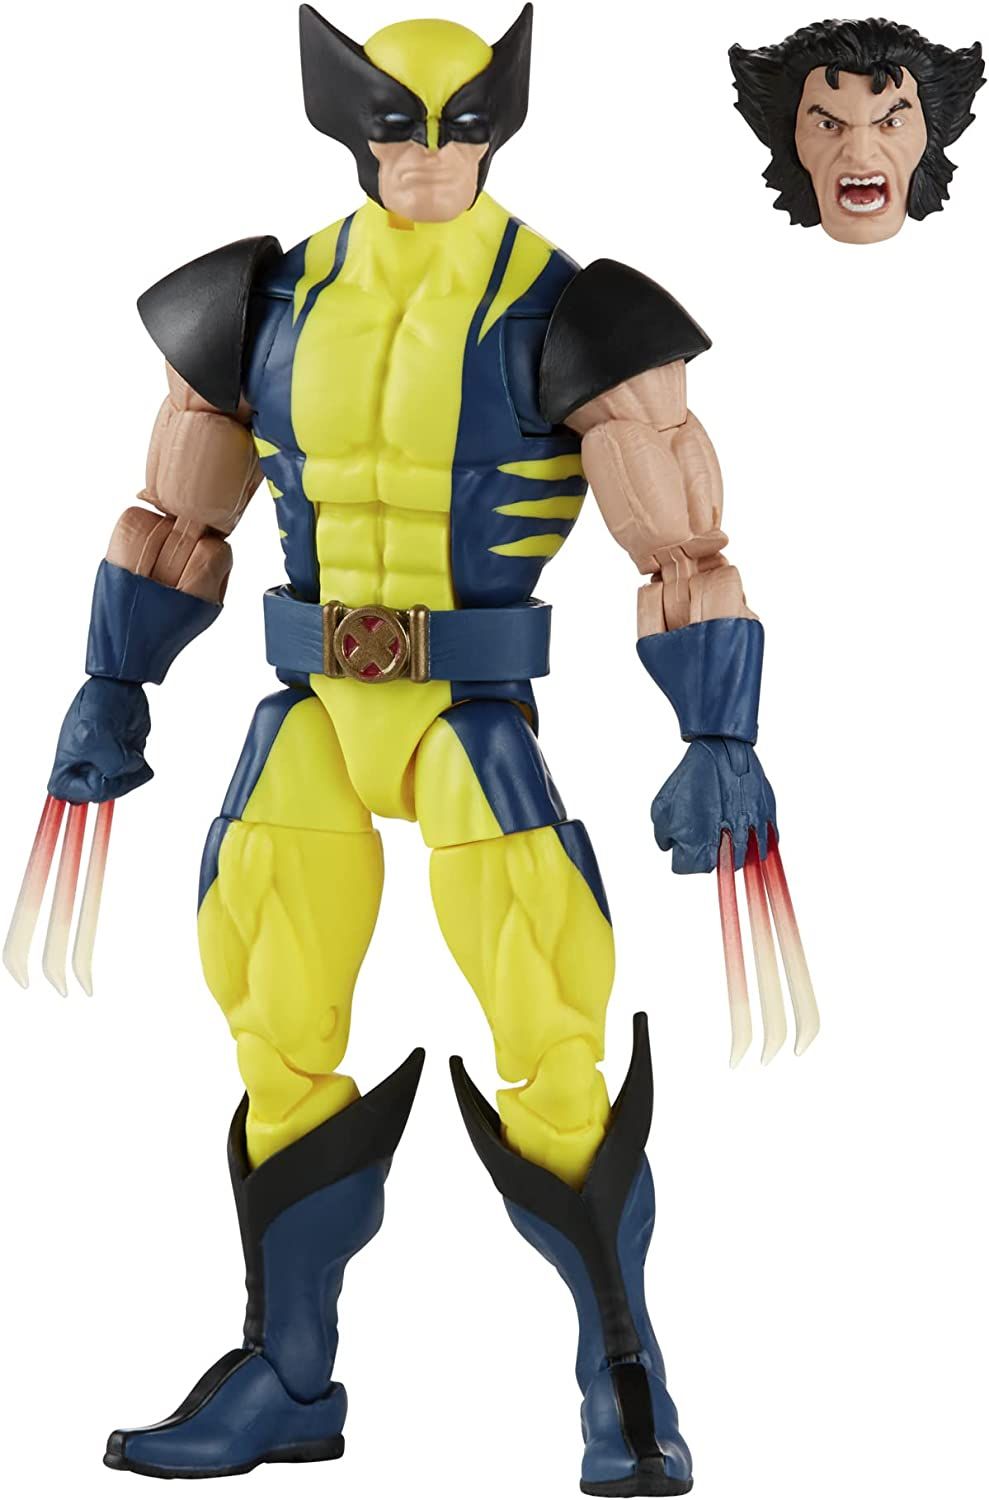 Marvel Legends Series X-Men Wolverine